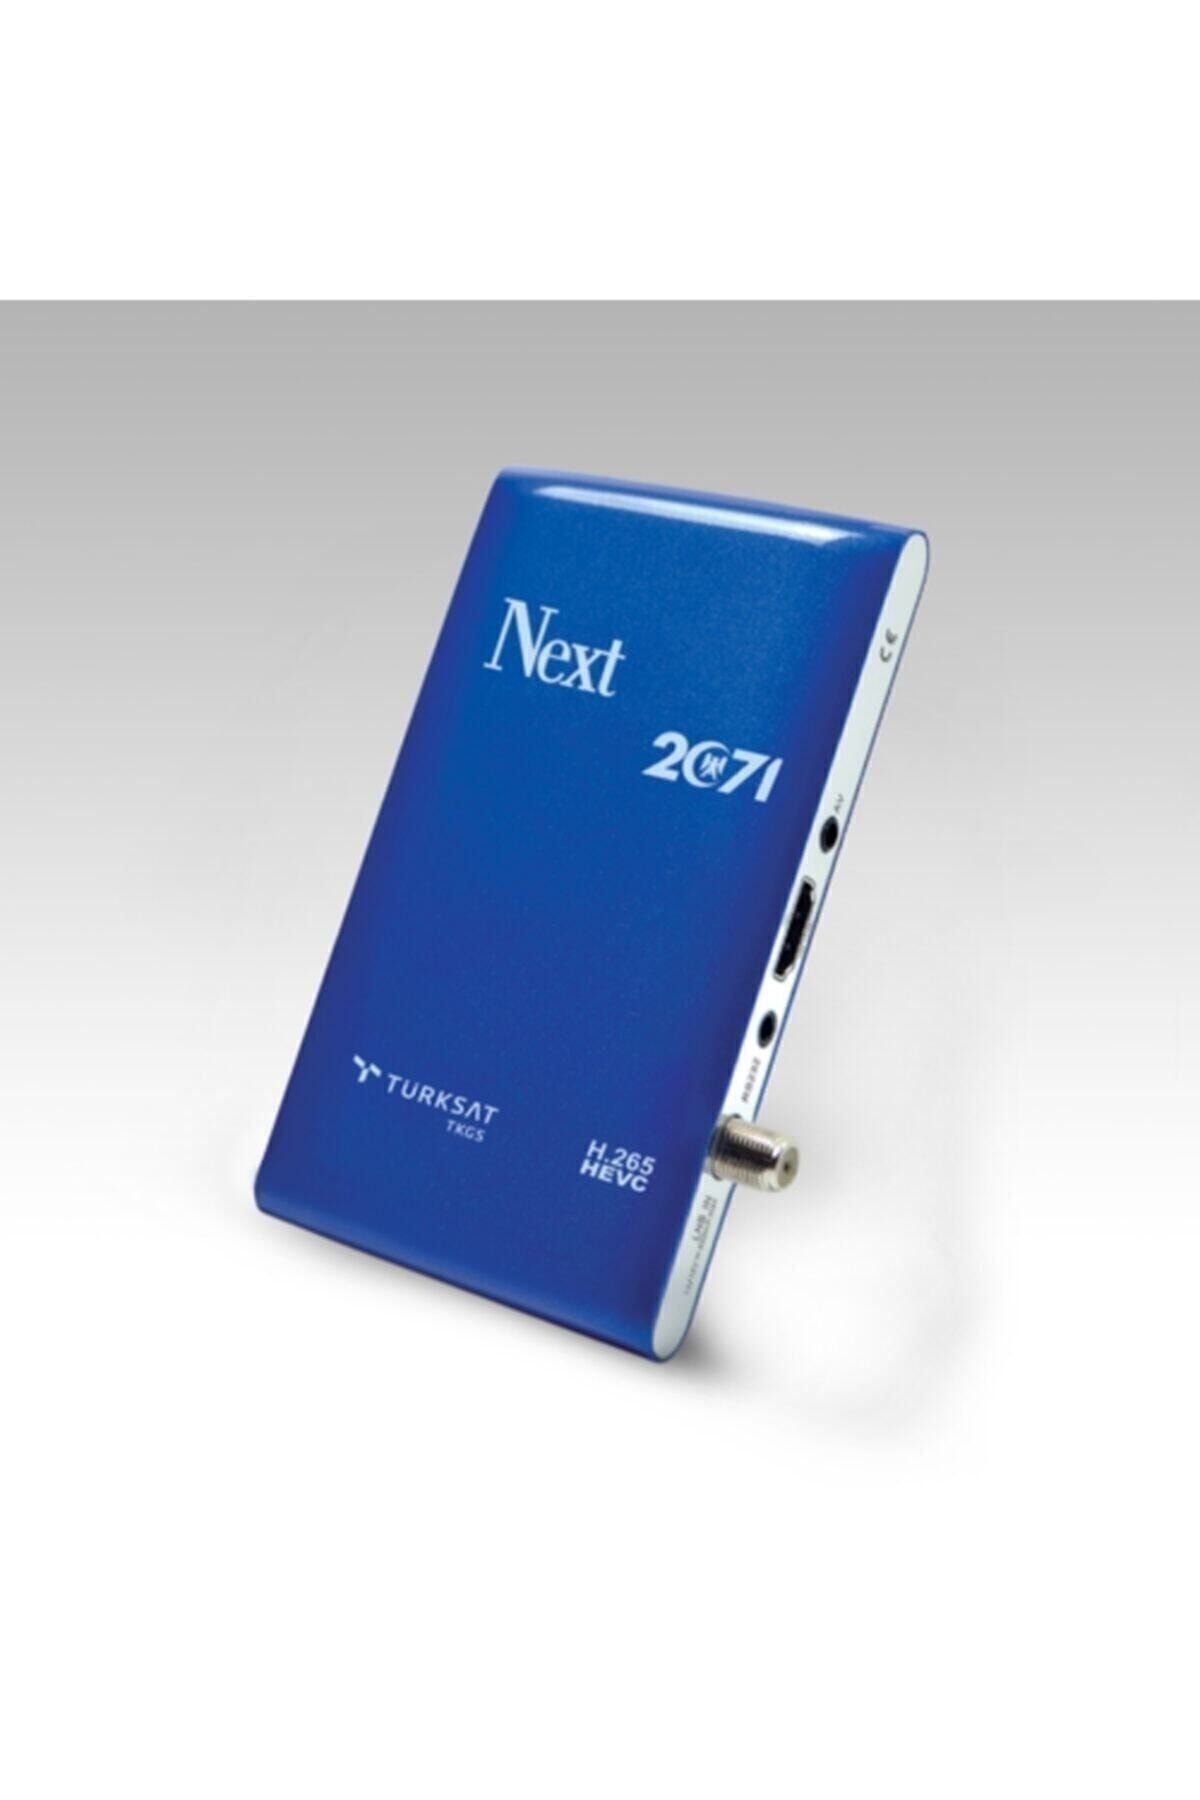 Next Nextstar 2071 (ıptv Hevc H.265) Çanaklı Çanaksız